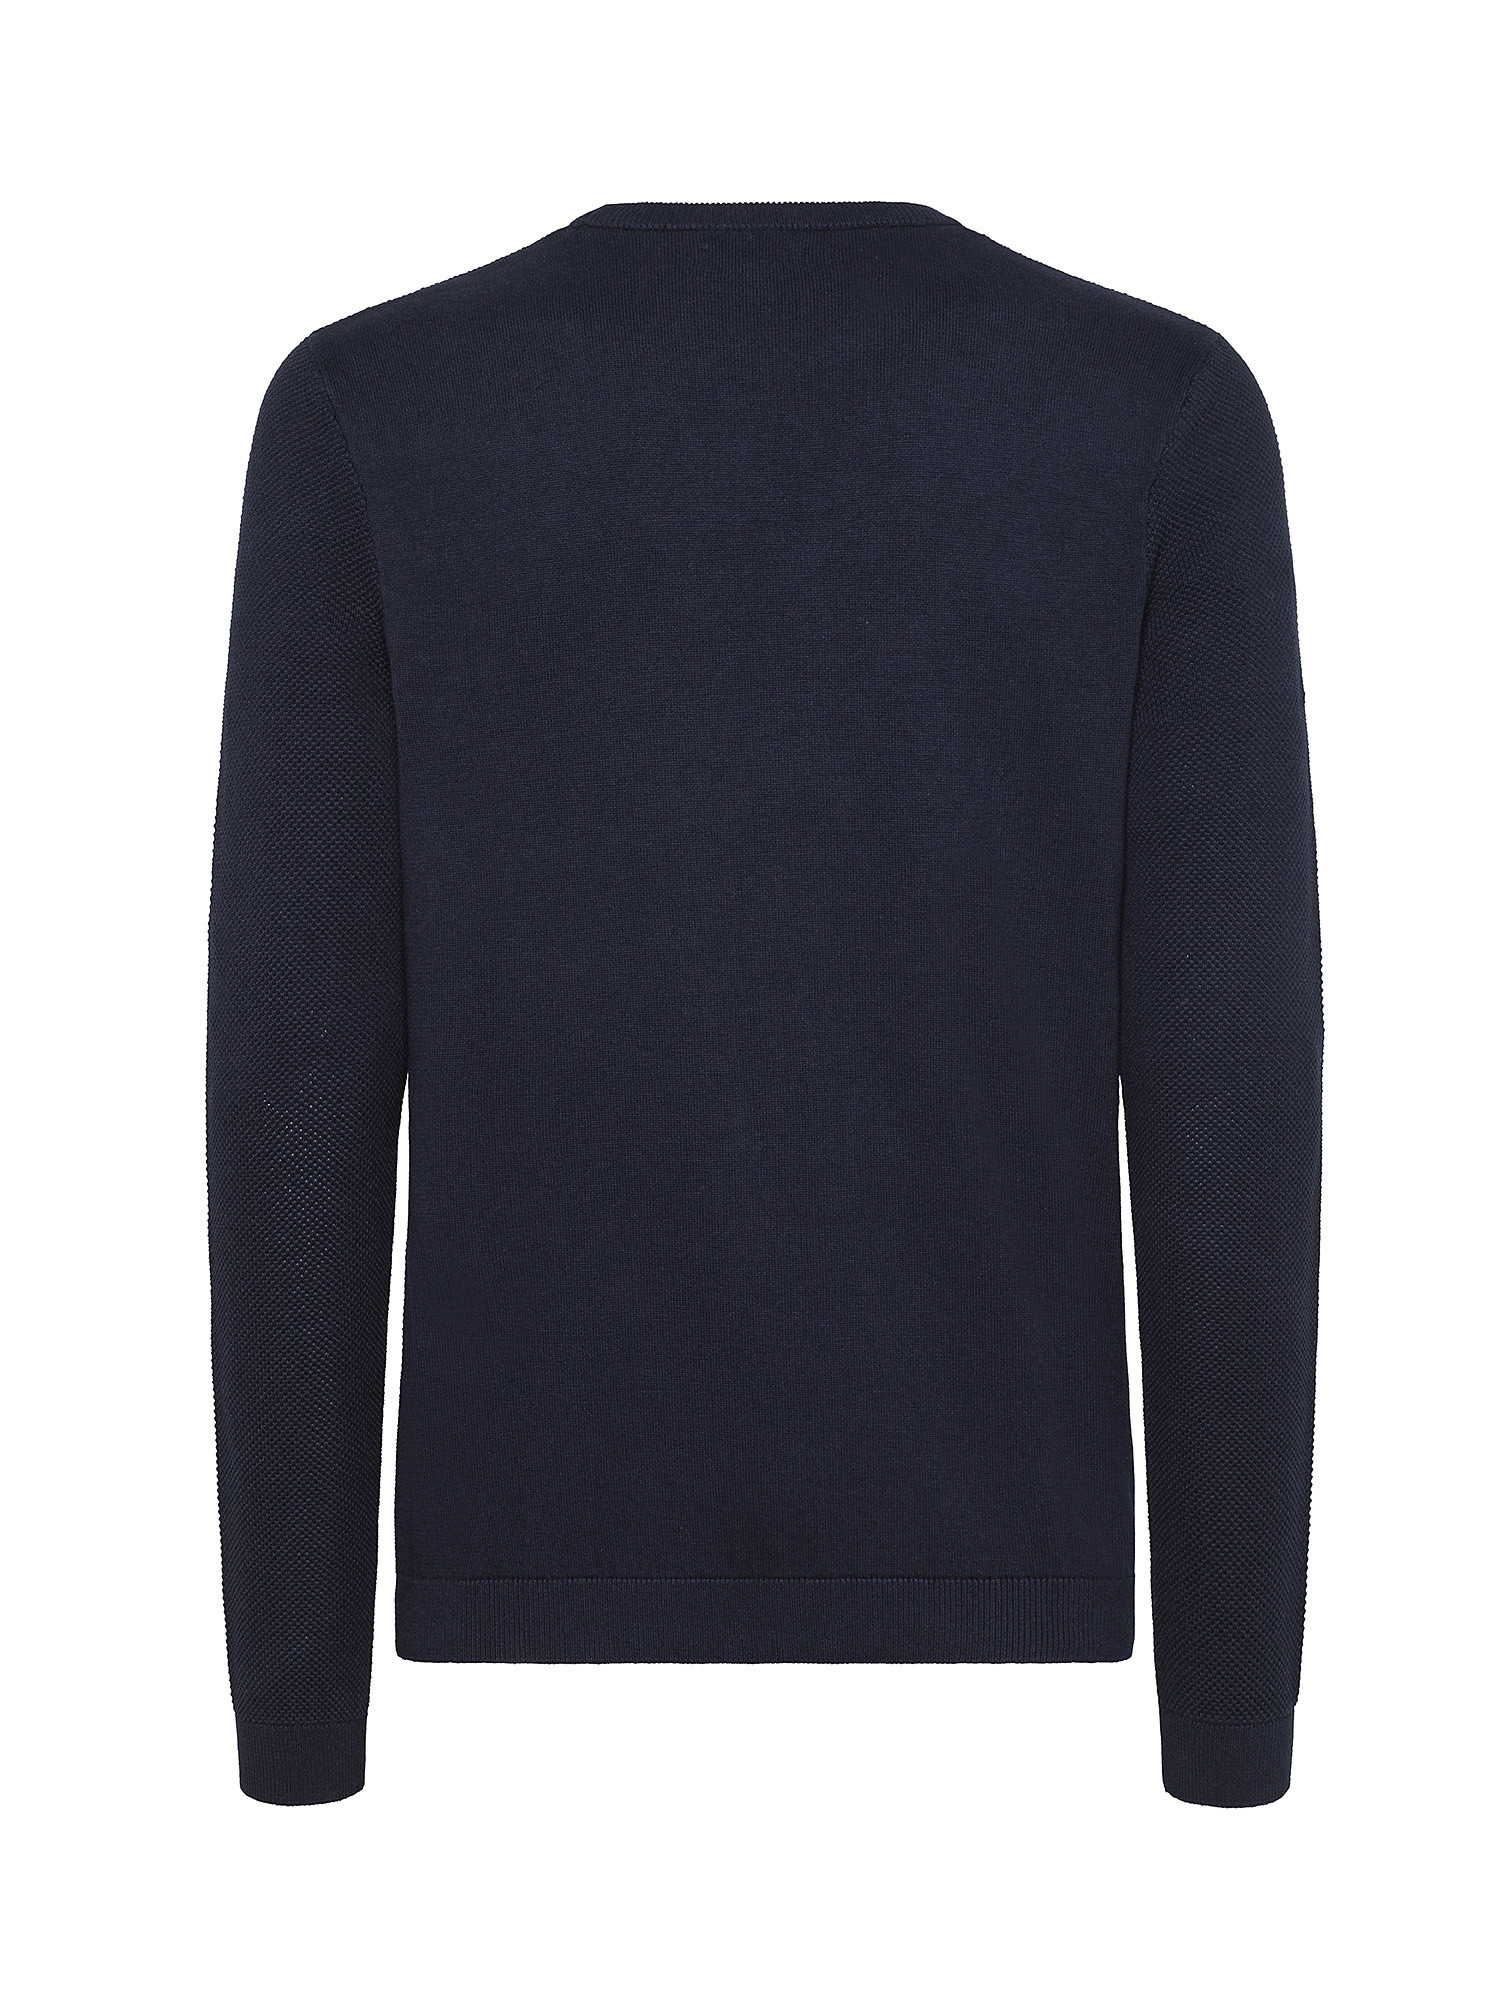 Luca D'Altieri - Crew neck sweater in pure cotton, Dark Blue, large image number 1